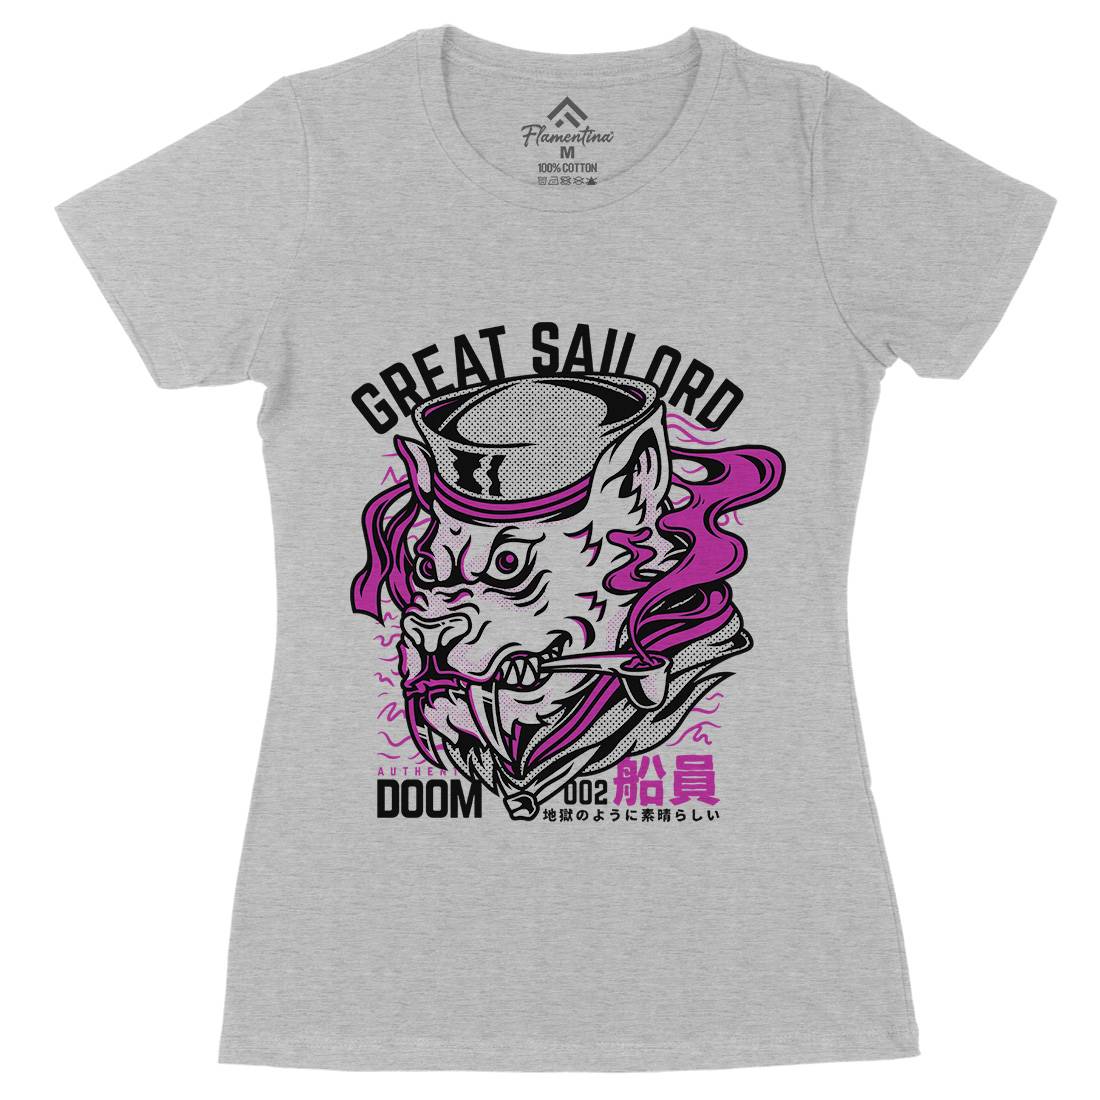 Great Sailord Womens Organic Crew Neck T-Shirt Navy D601